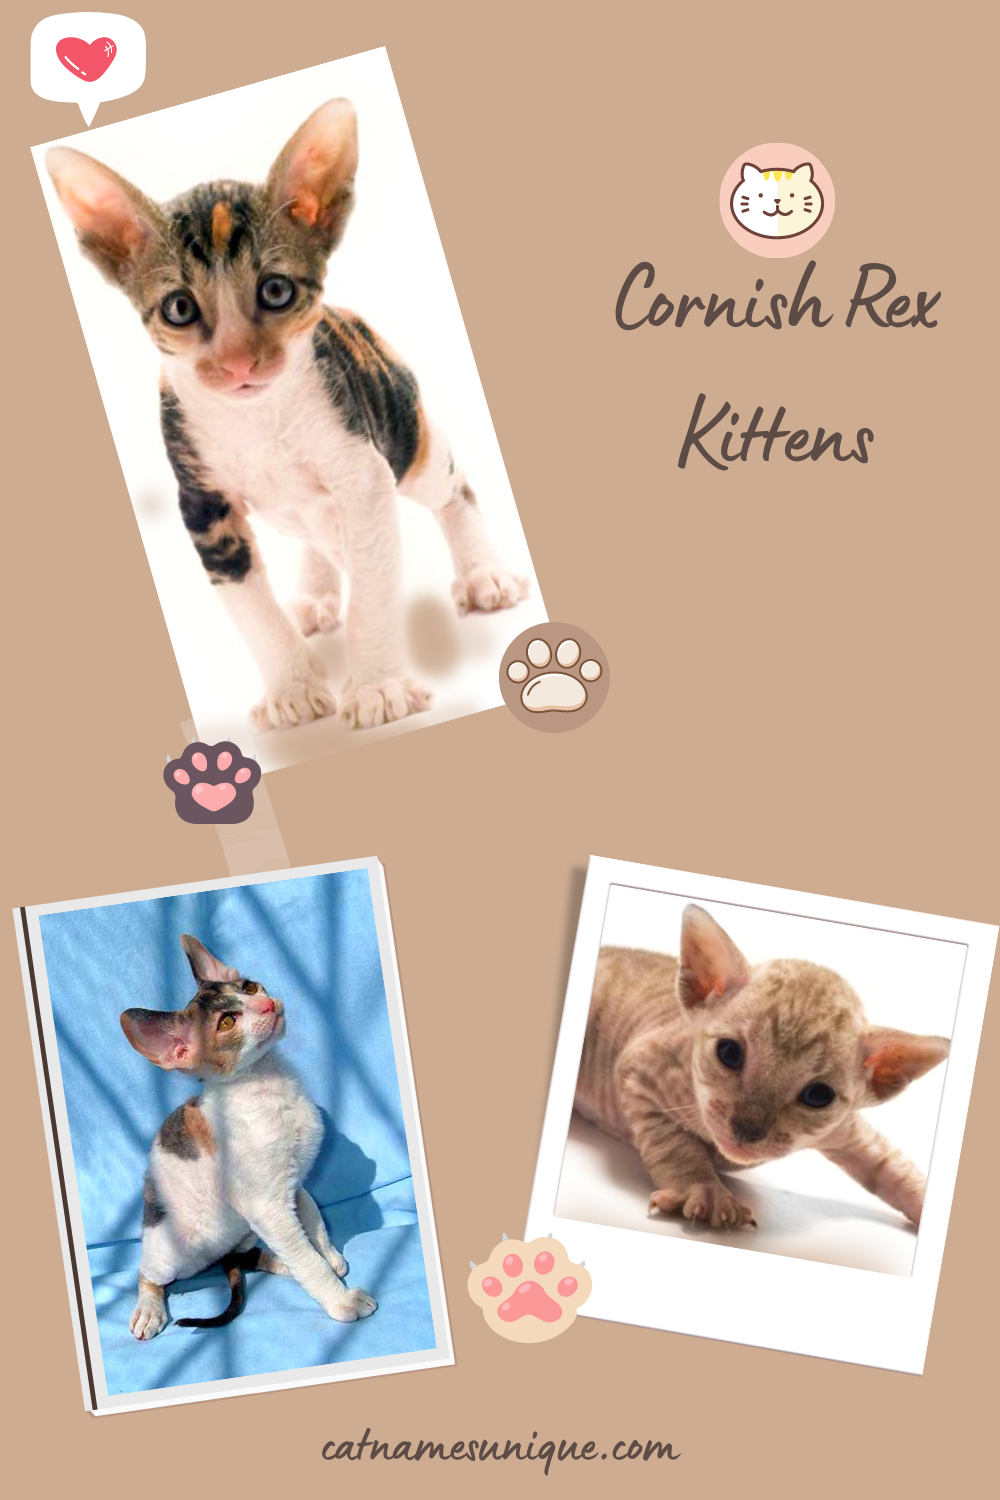 Cornish Rex Kittens